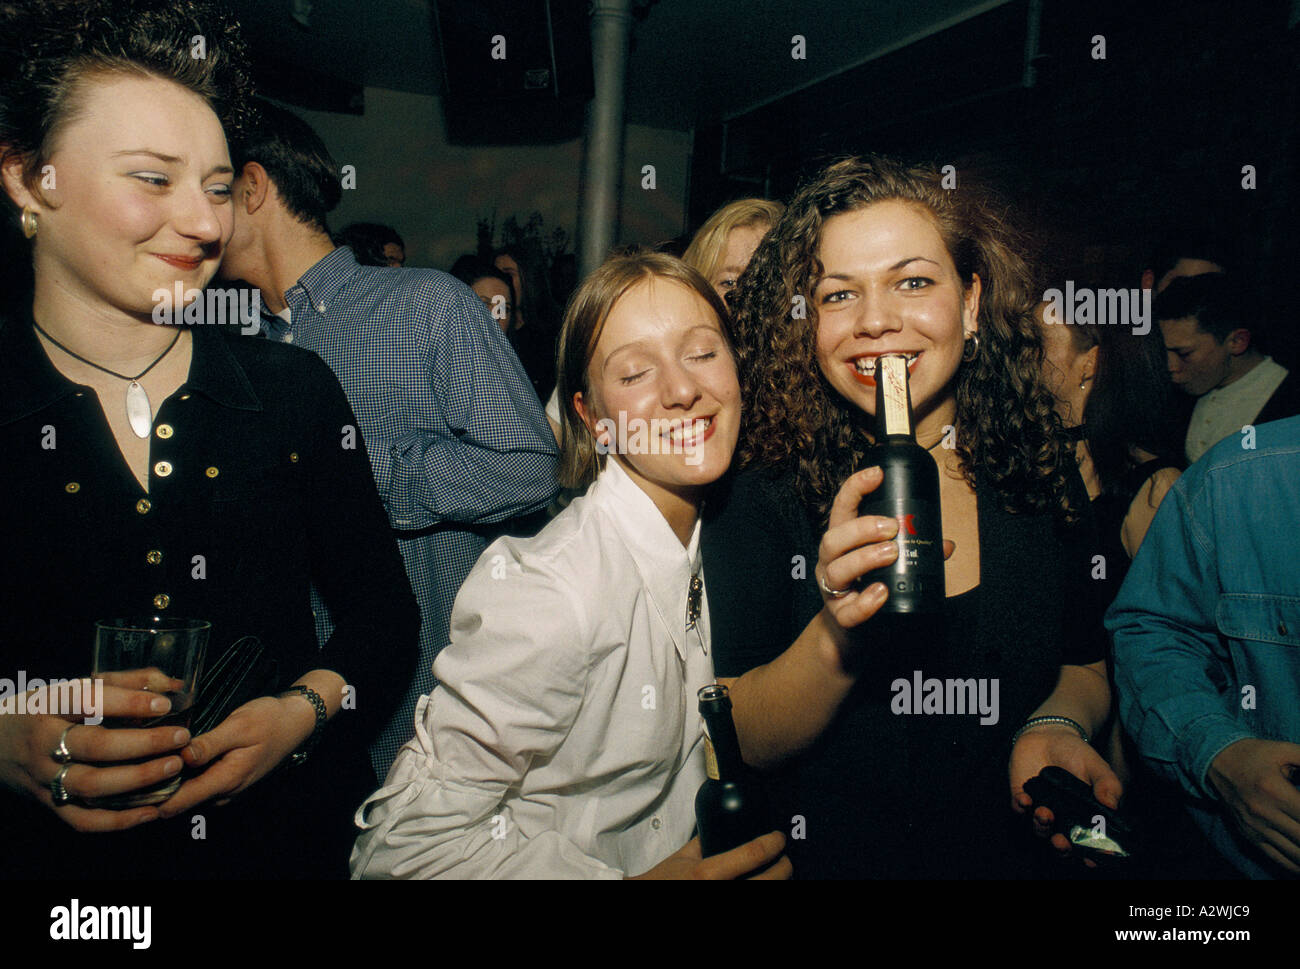 home nightclub manchester Stock Photo